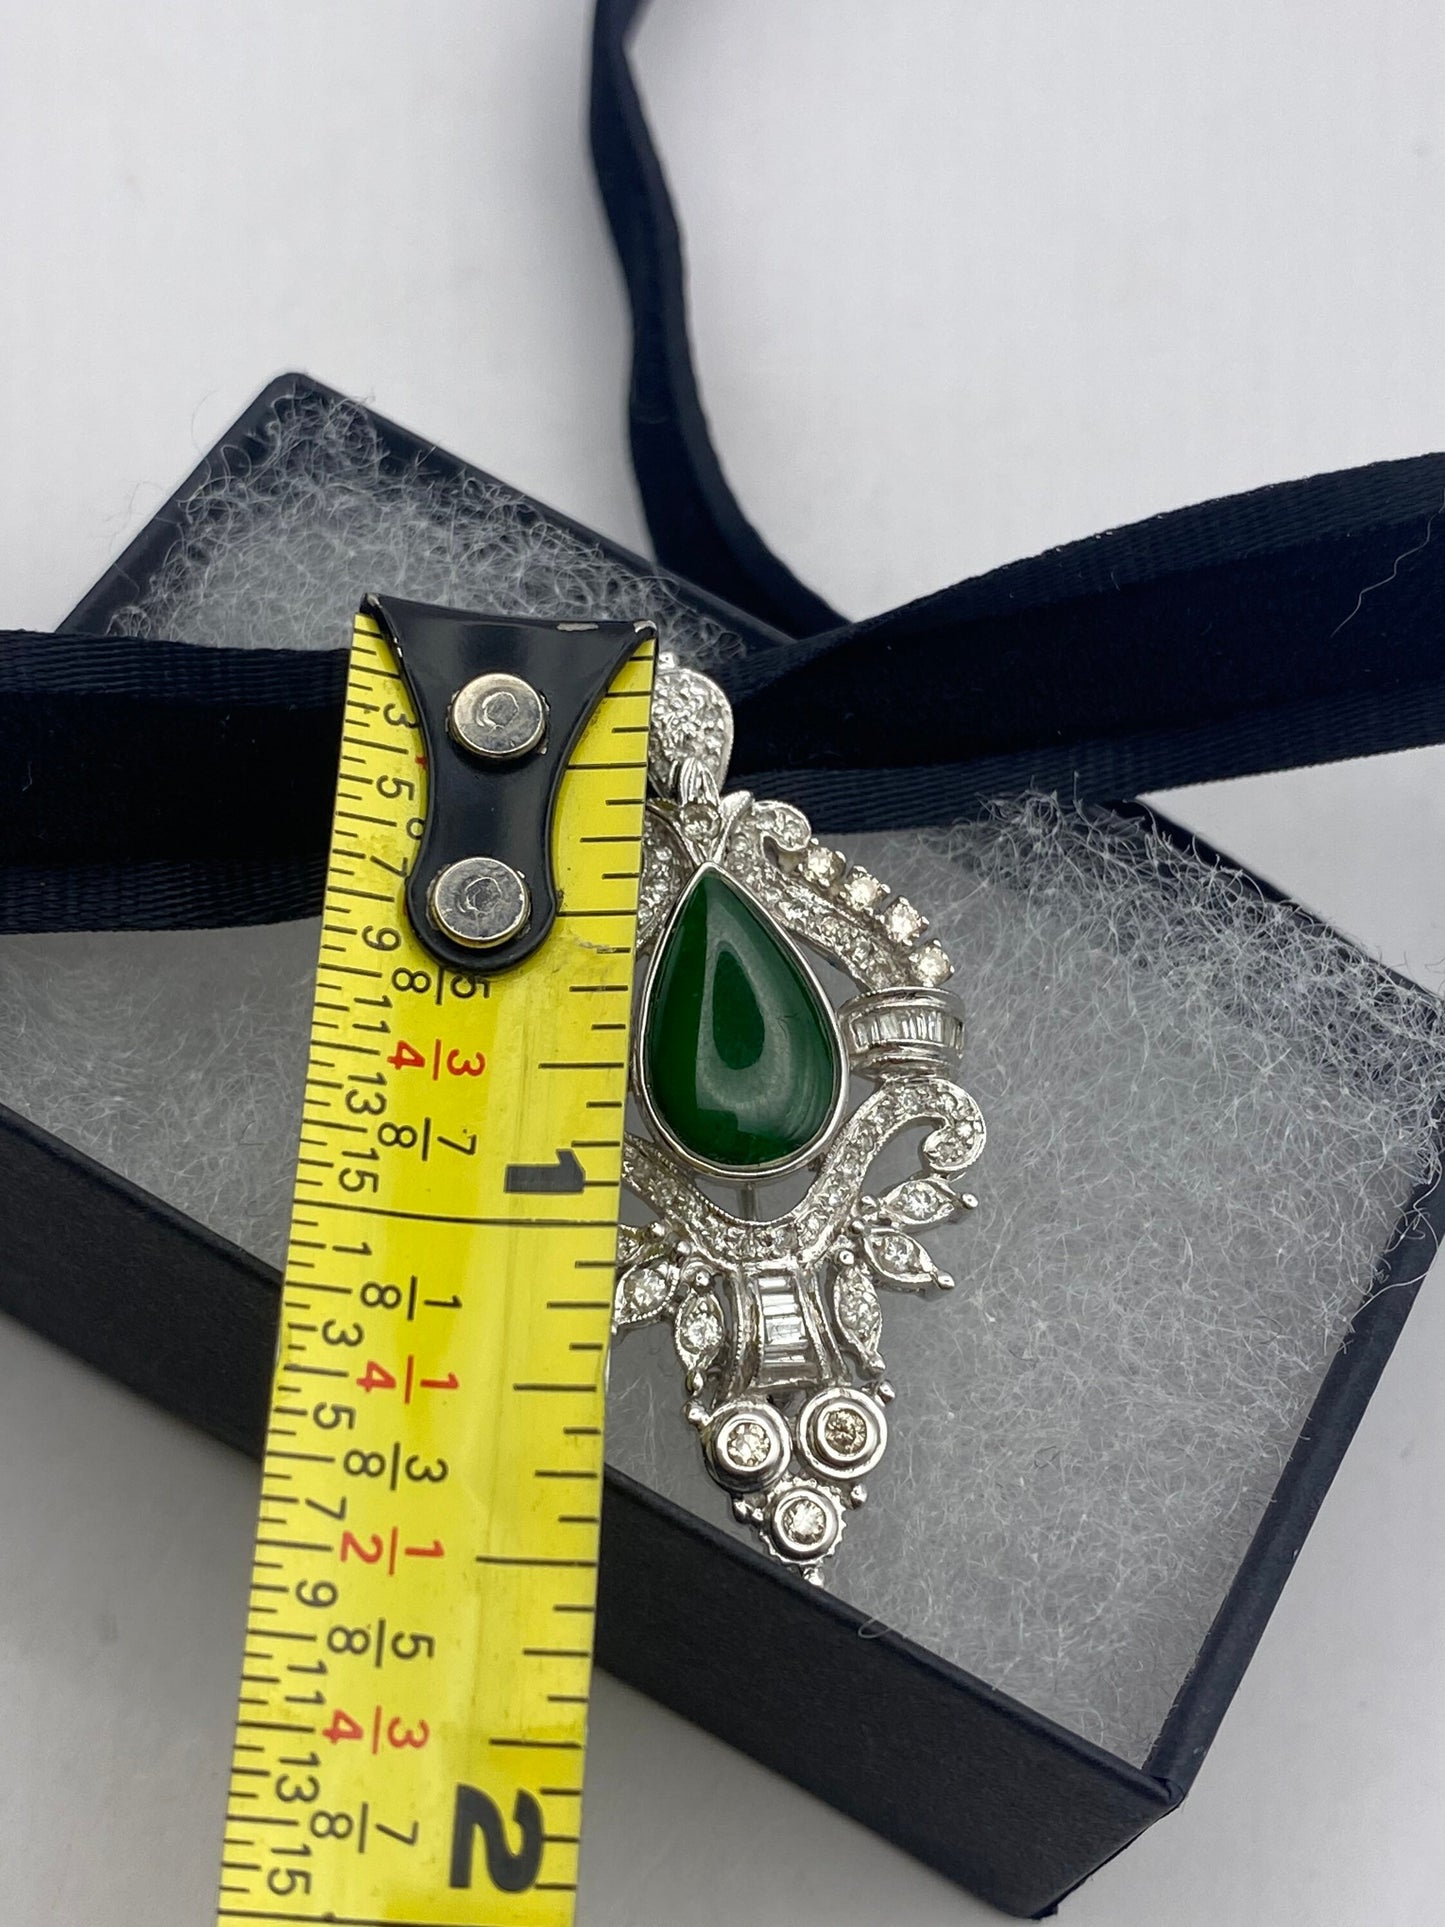 Vintage Burmese Jade Diamond 14k White Gold Choker Pendant Pin Necklace